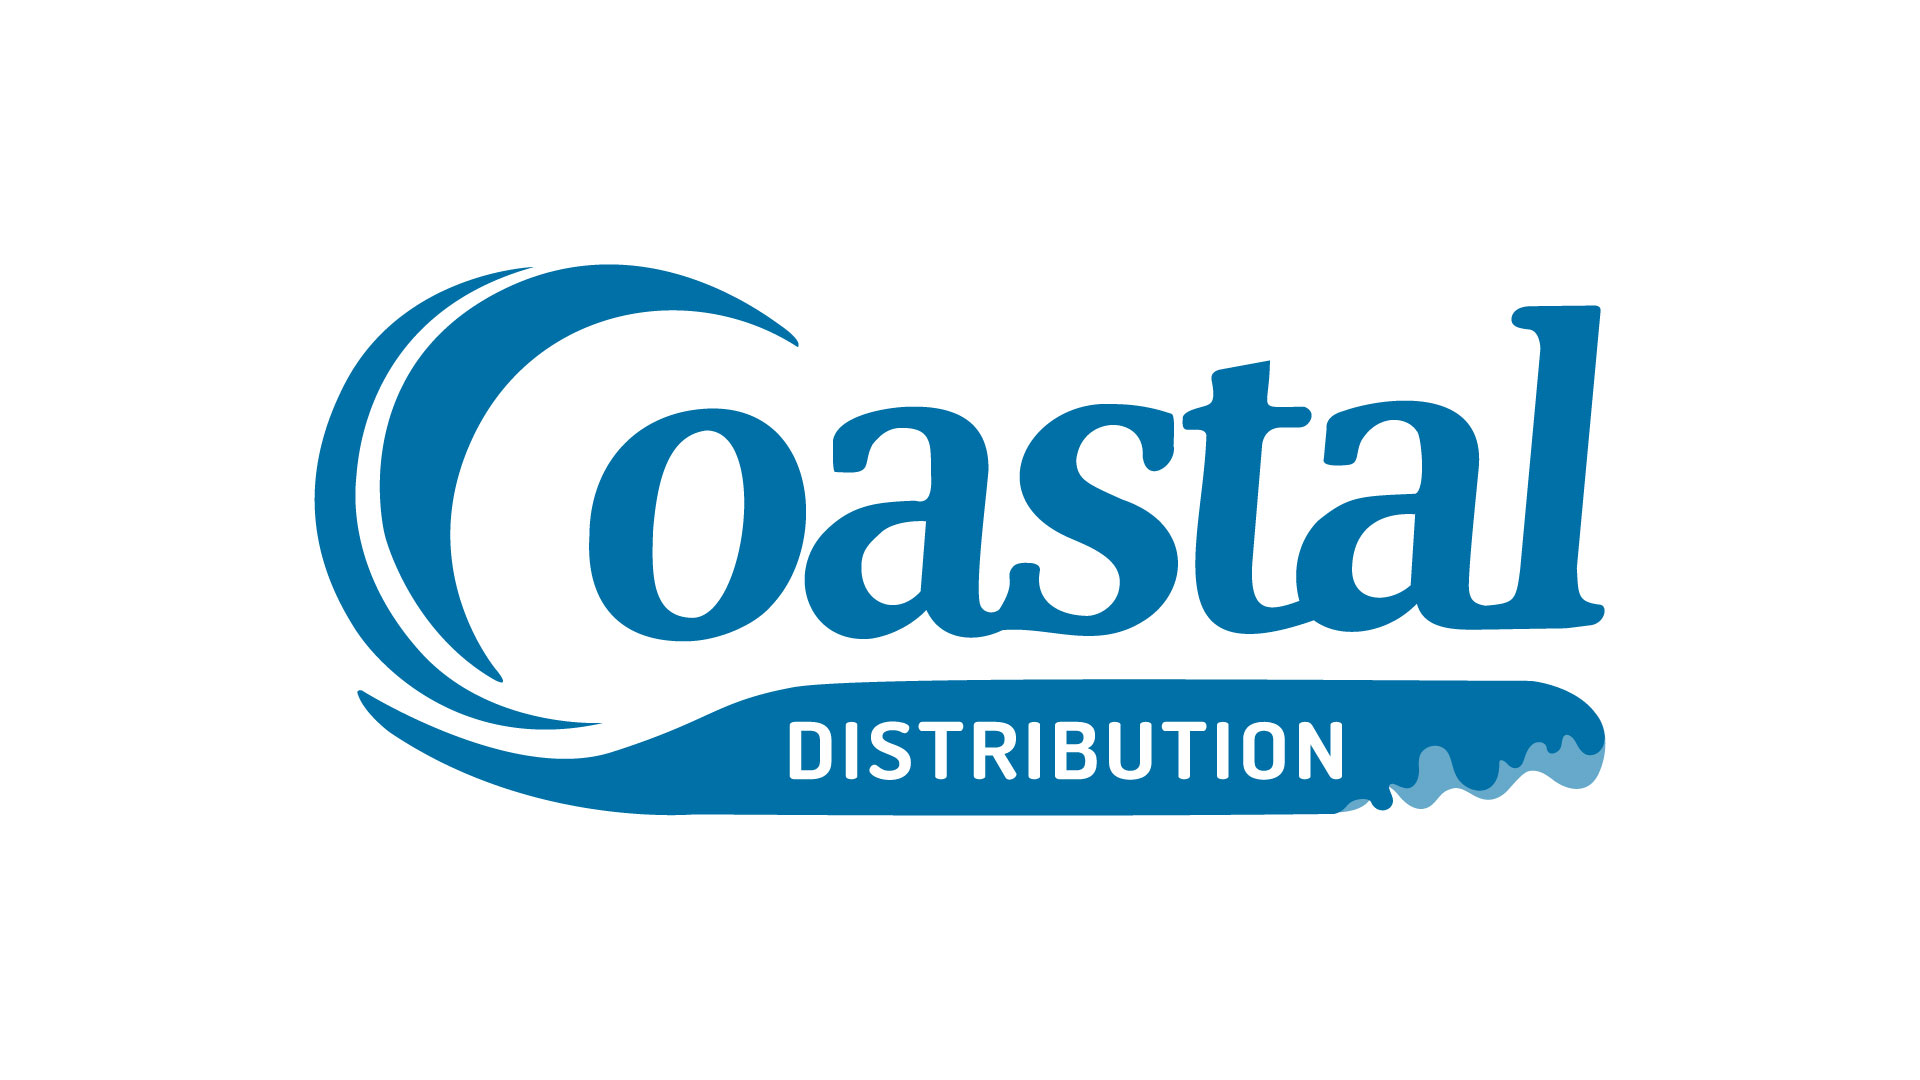 Coastal Distribution Logo Design | 702 Pros